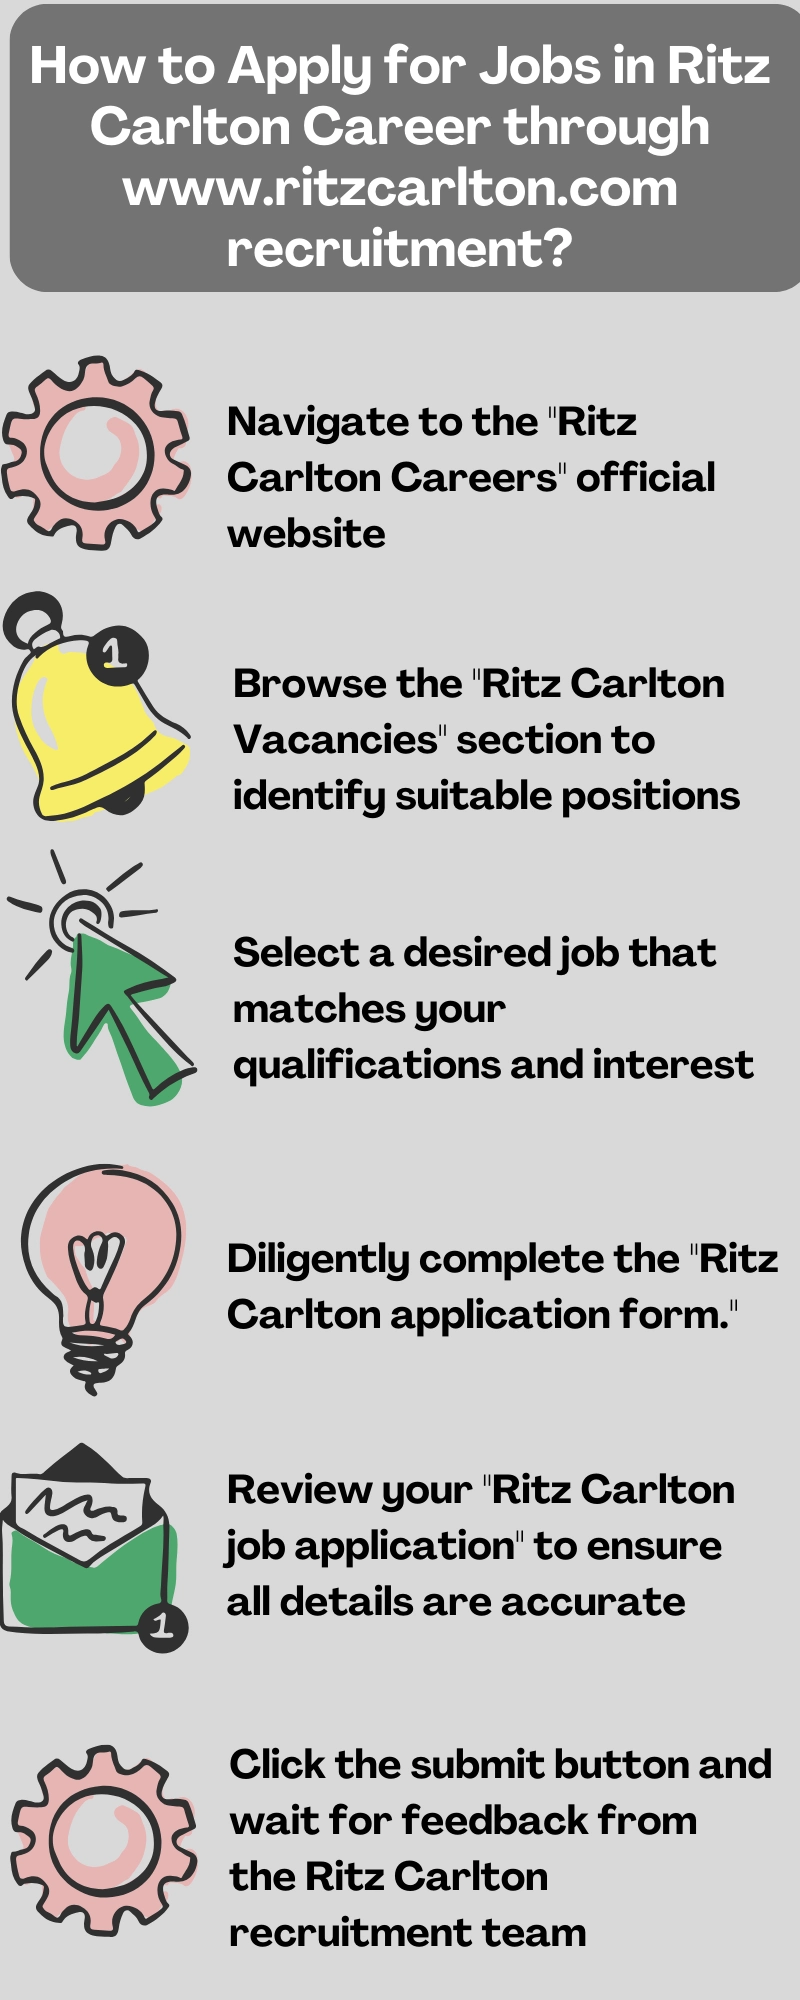 How to Apply for Jobs in Ritz Carlton Career through www.ritzcarlton.com recruitment_